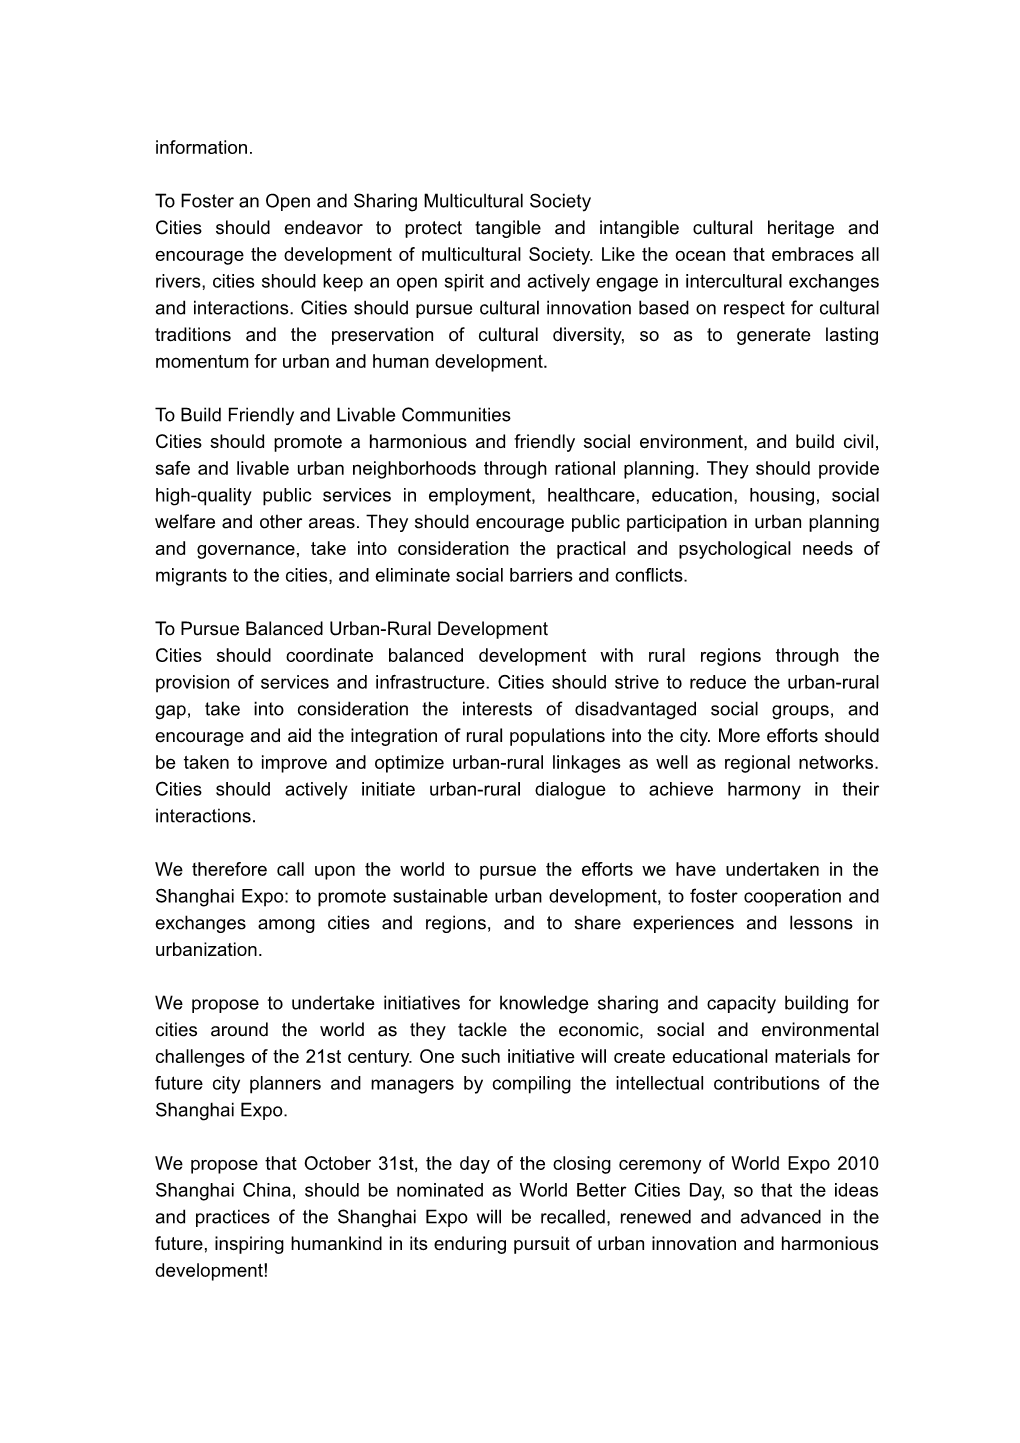 Full Text of Shanghai Declaration